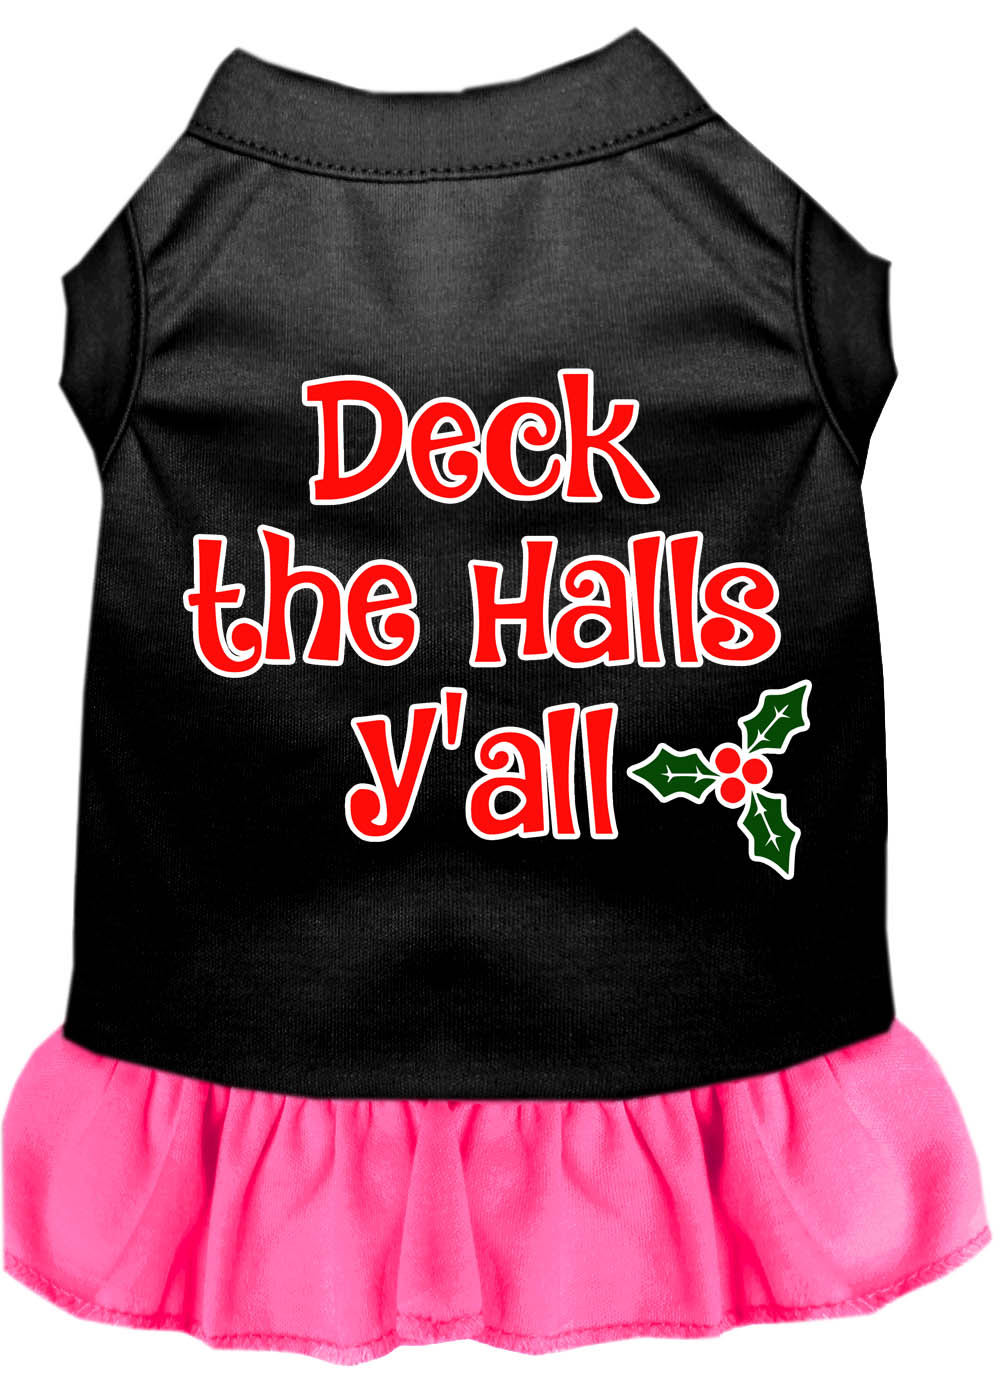 Deck the Halls Y'all Screen Print Dog Dress Black with Bright Pink XXL